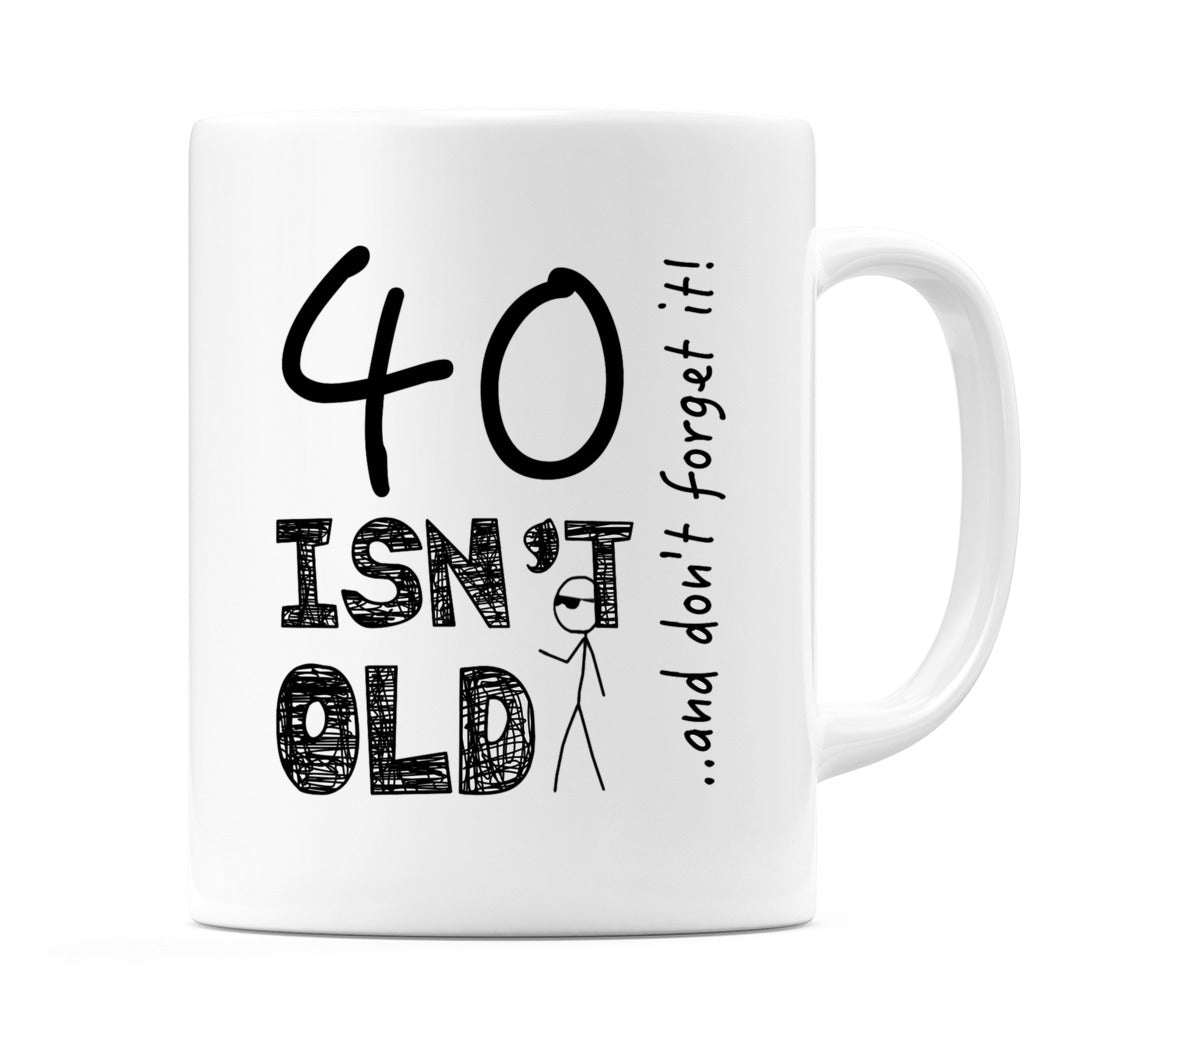 40 Isn't Old Mug